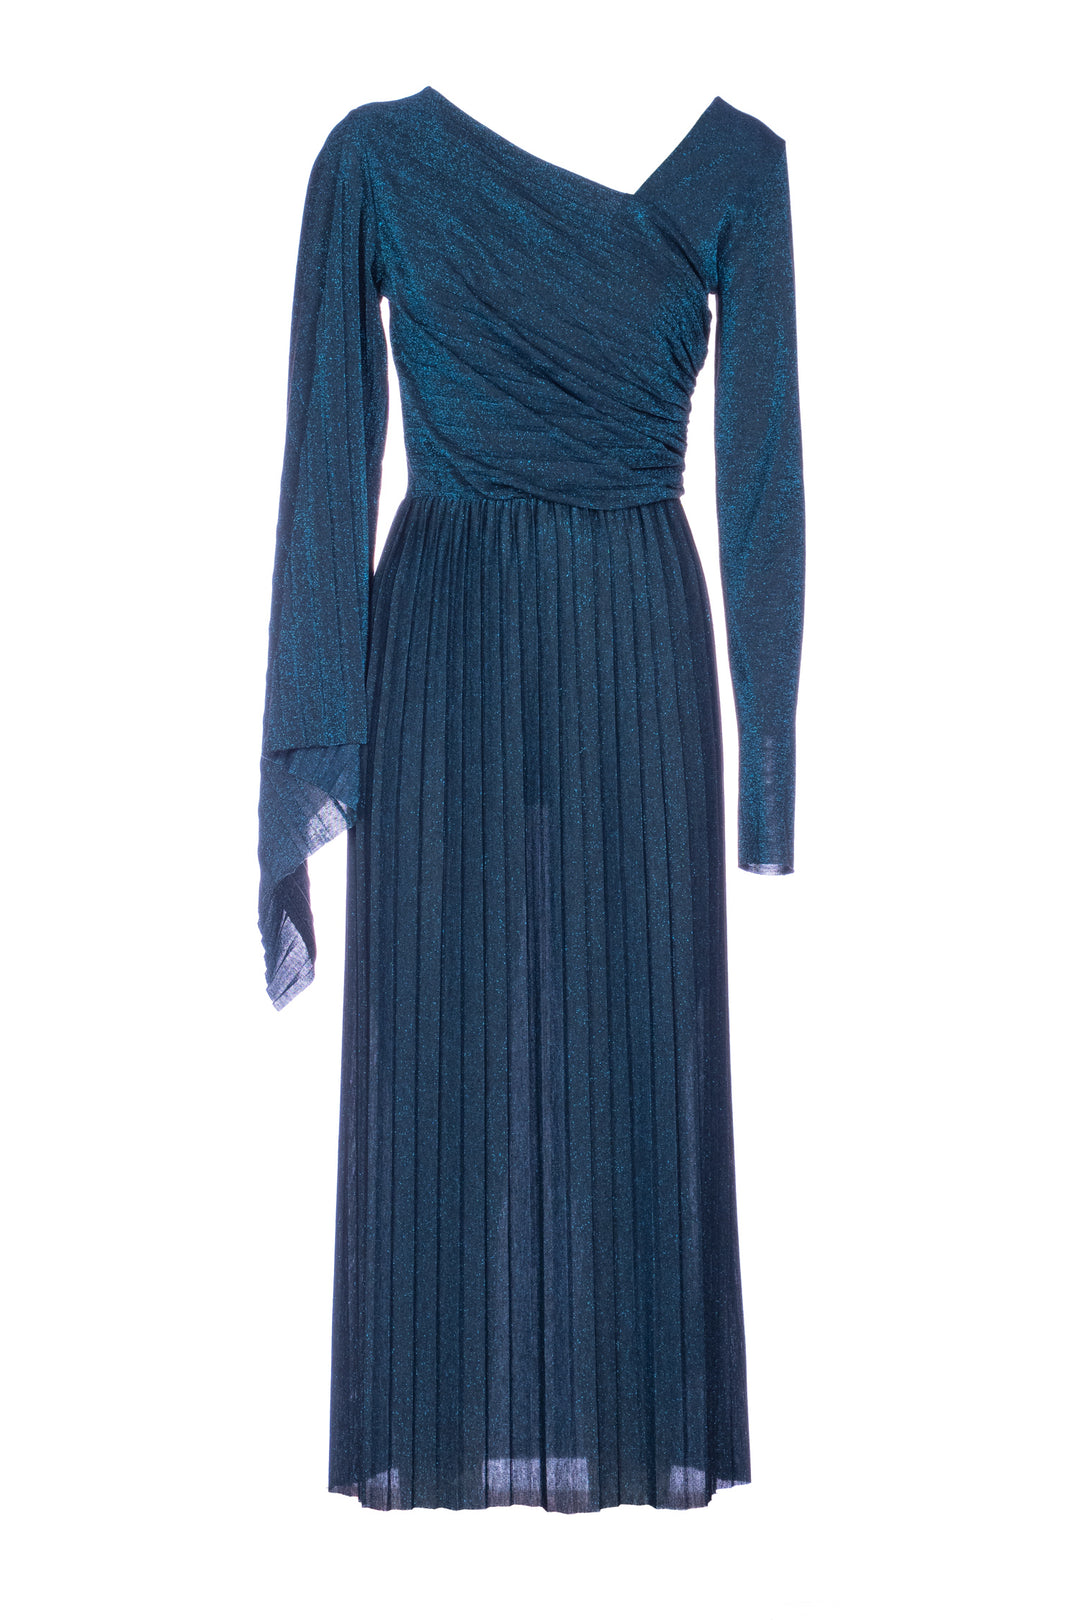 KAOS Abito lungo blu plissé in jersey lurex - Mancinelli 1954